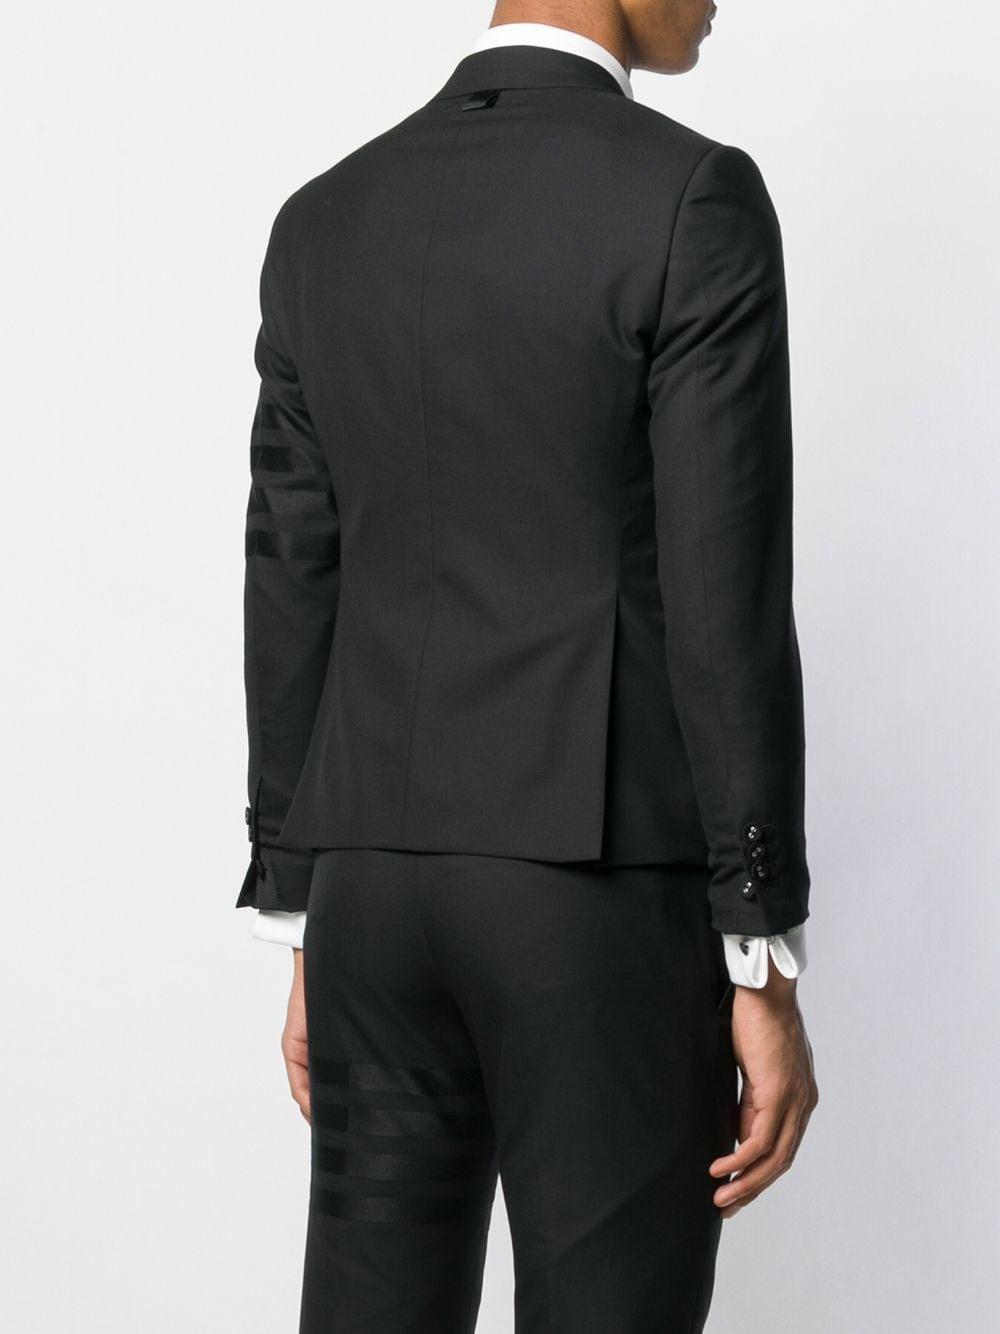 Thom Browne Plain Weave 4-bar Suit in Black for Men - Lyst